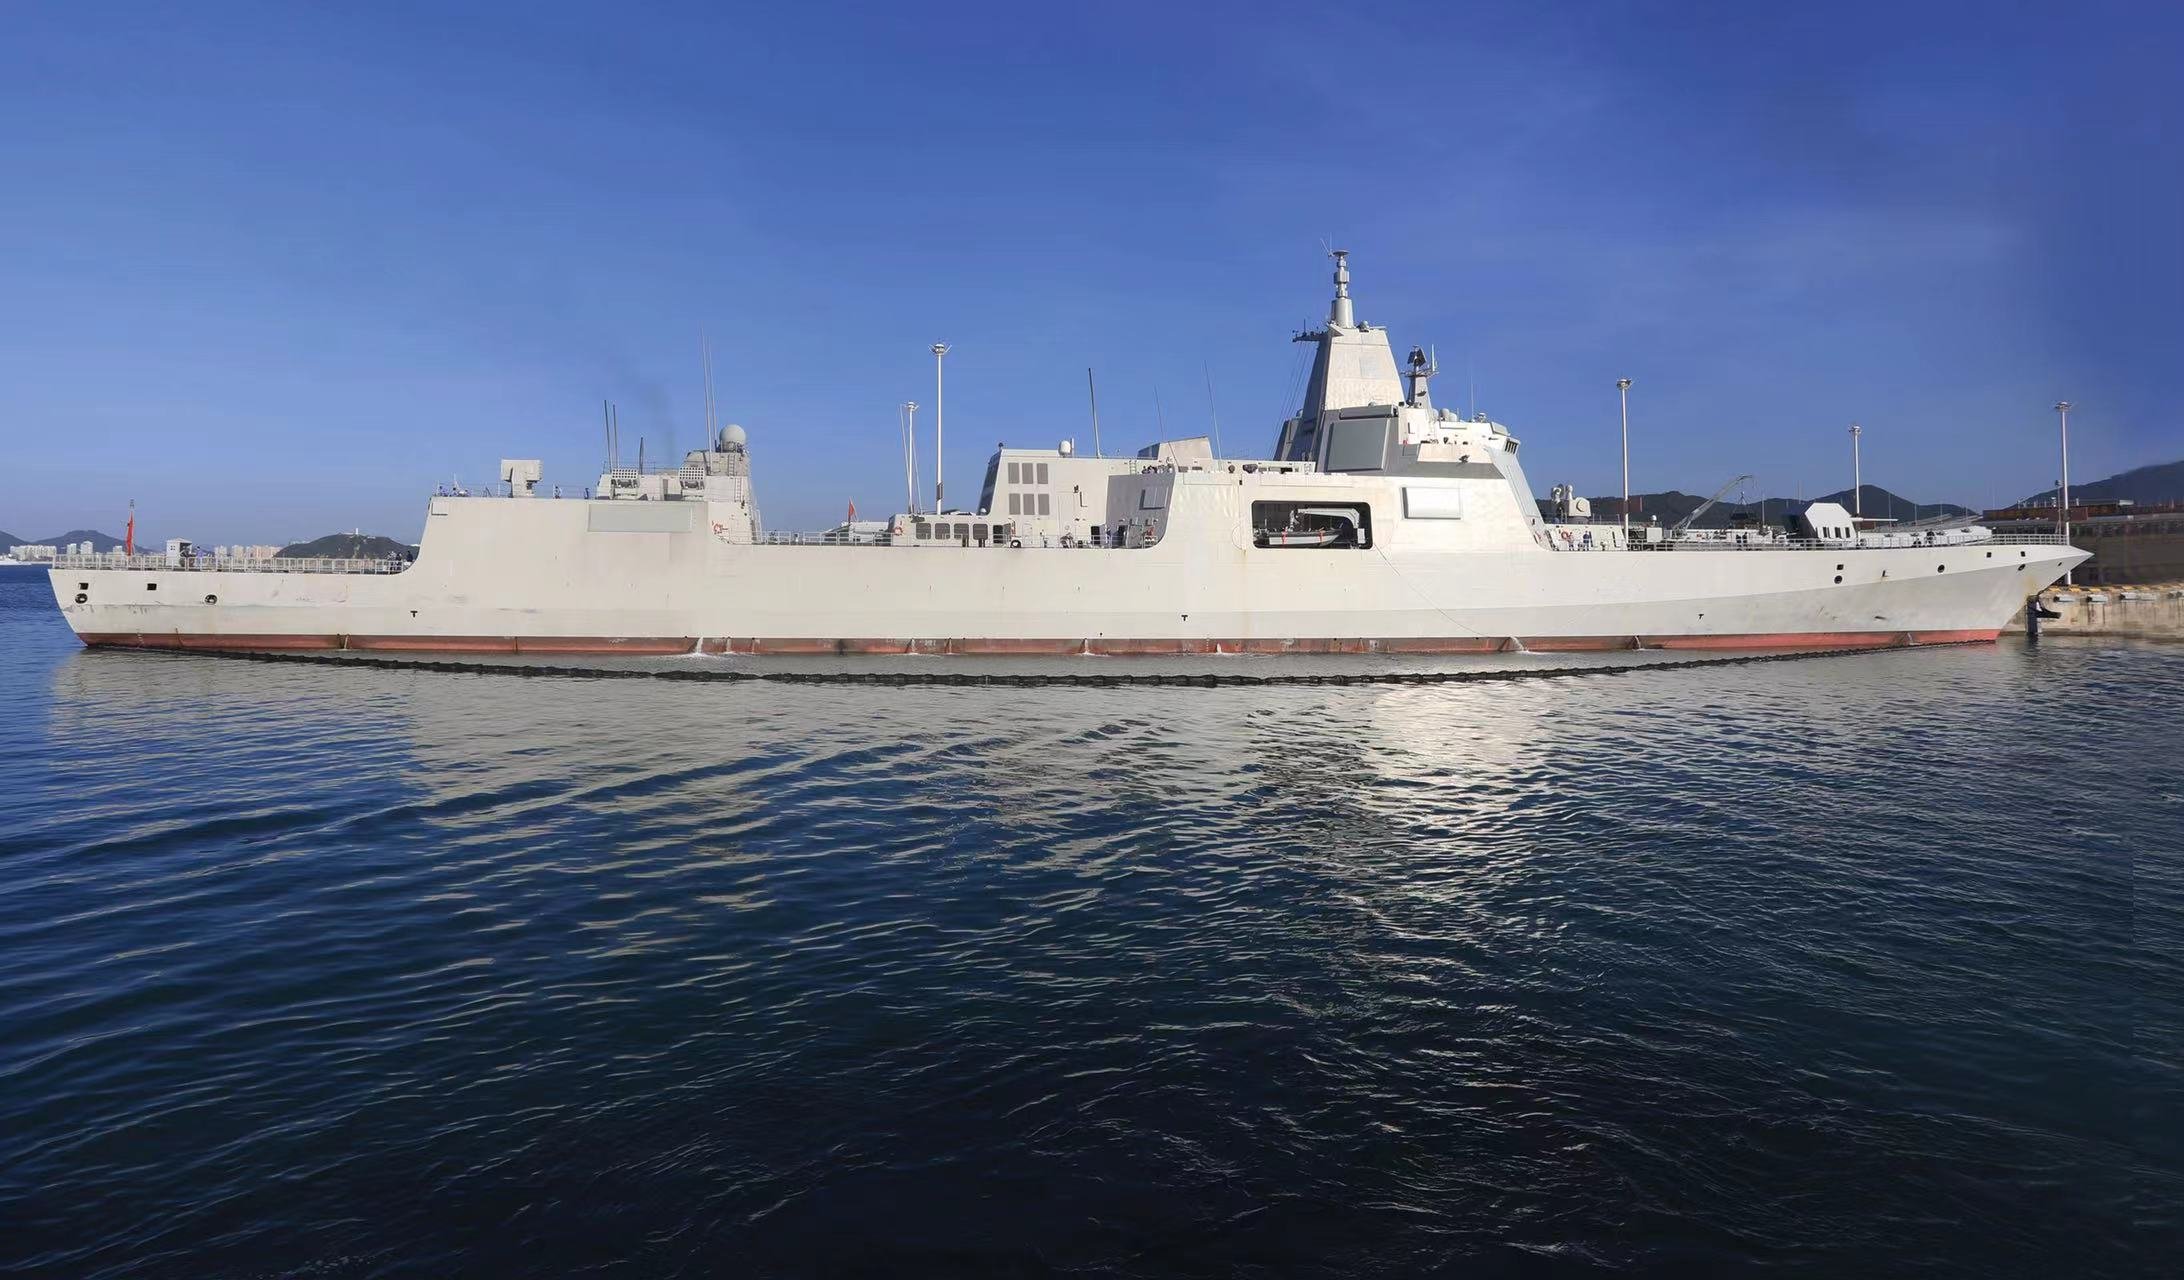 彩云香江 on Twitter: "PLAN Type 055 Destroyer 107 Zunyi ? https://t.co/Q2TA0oW5ey" / Twitter